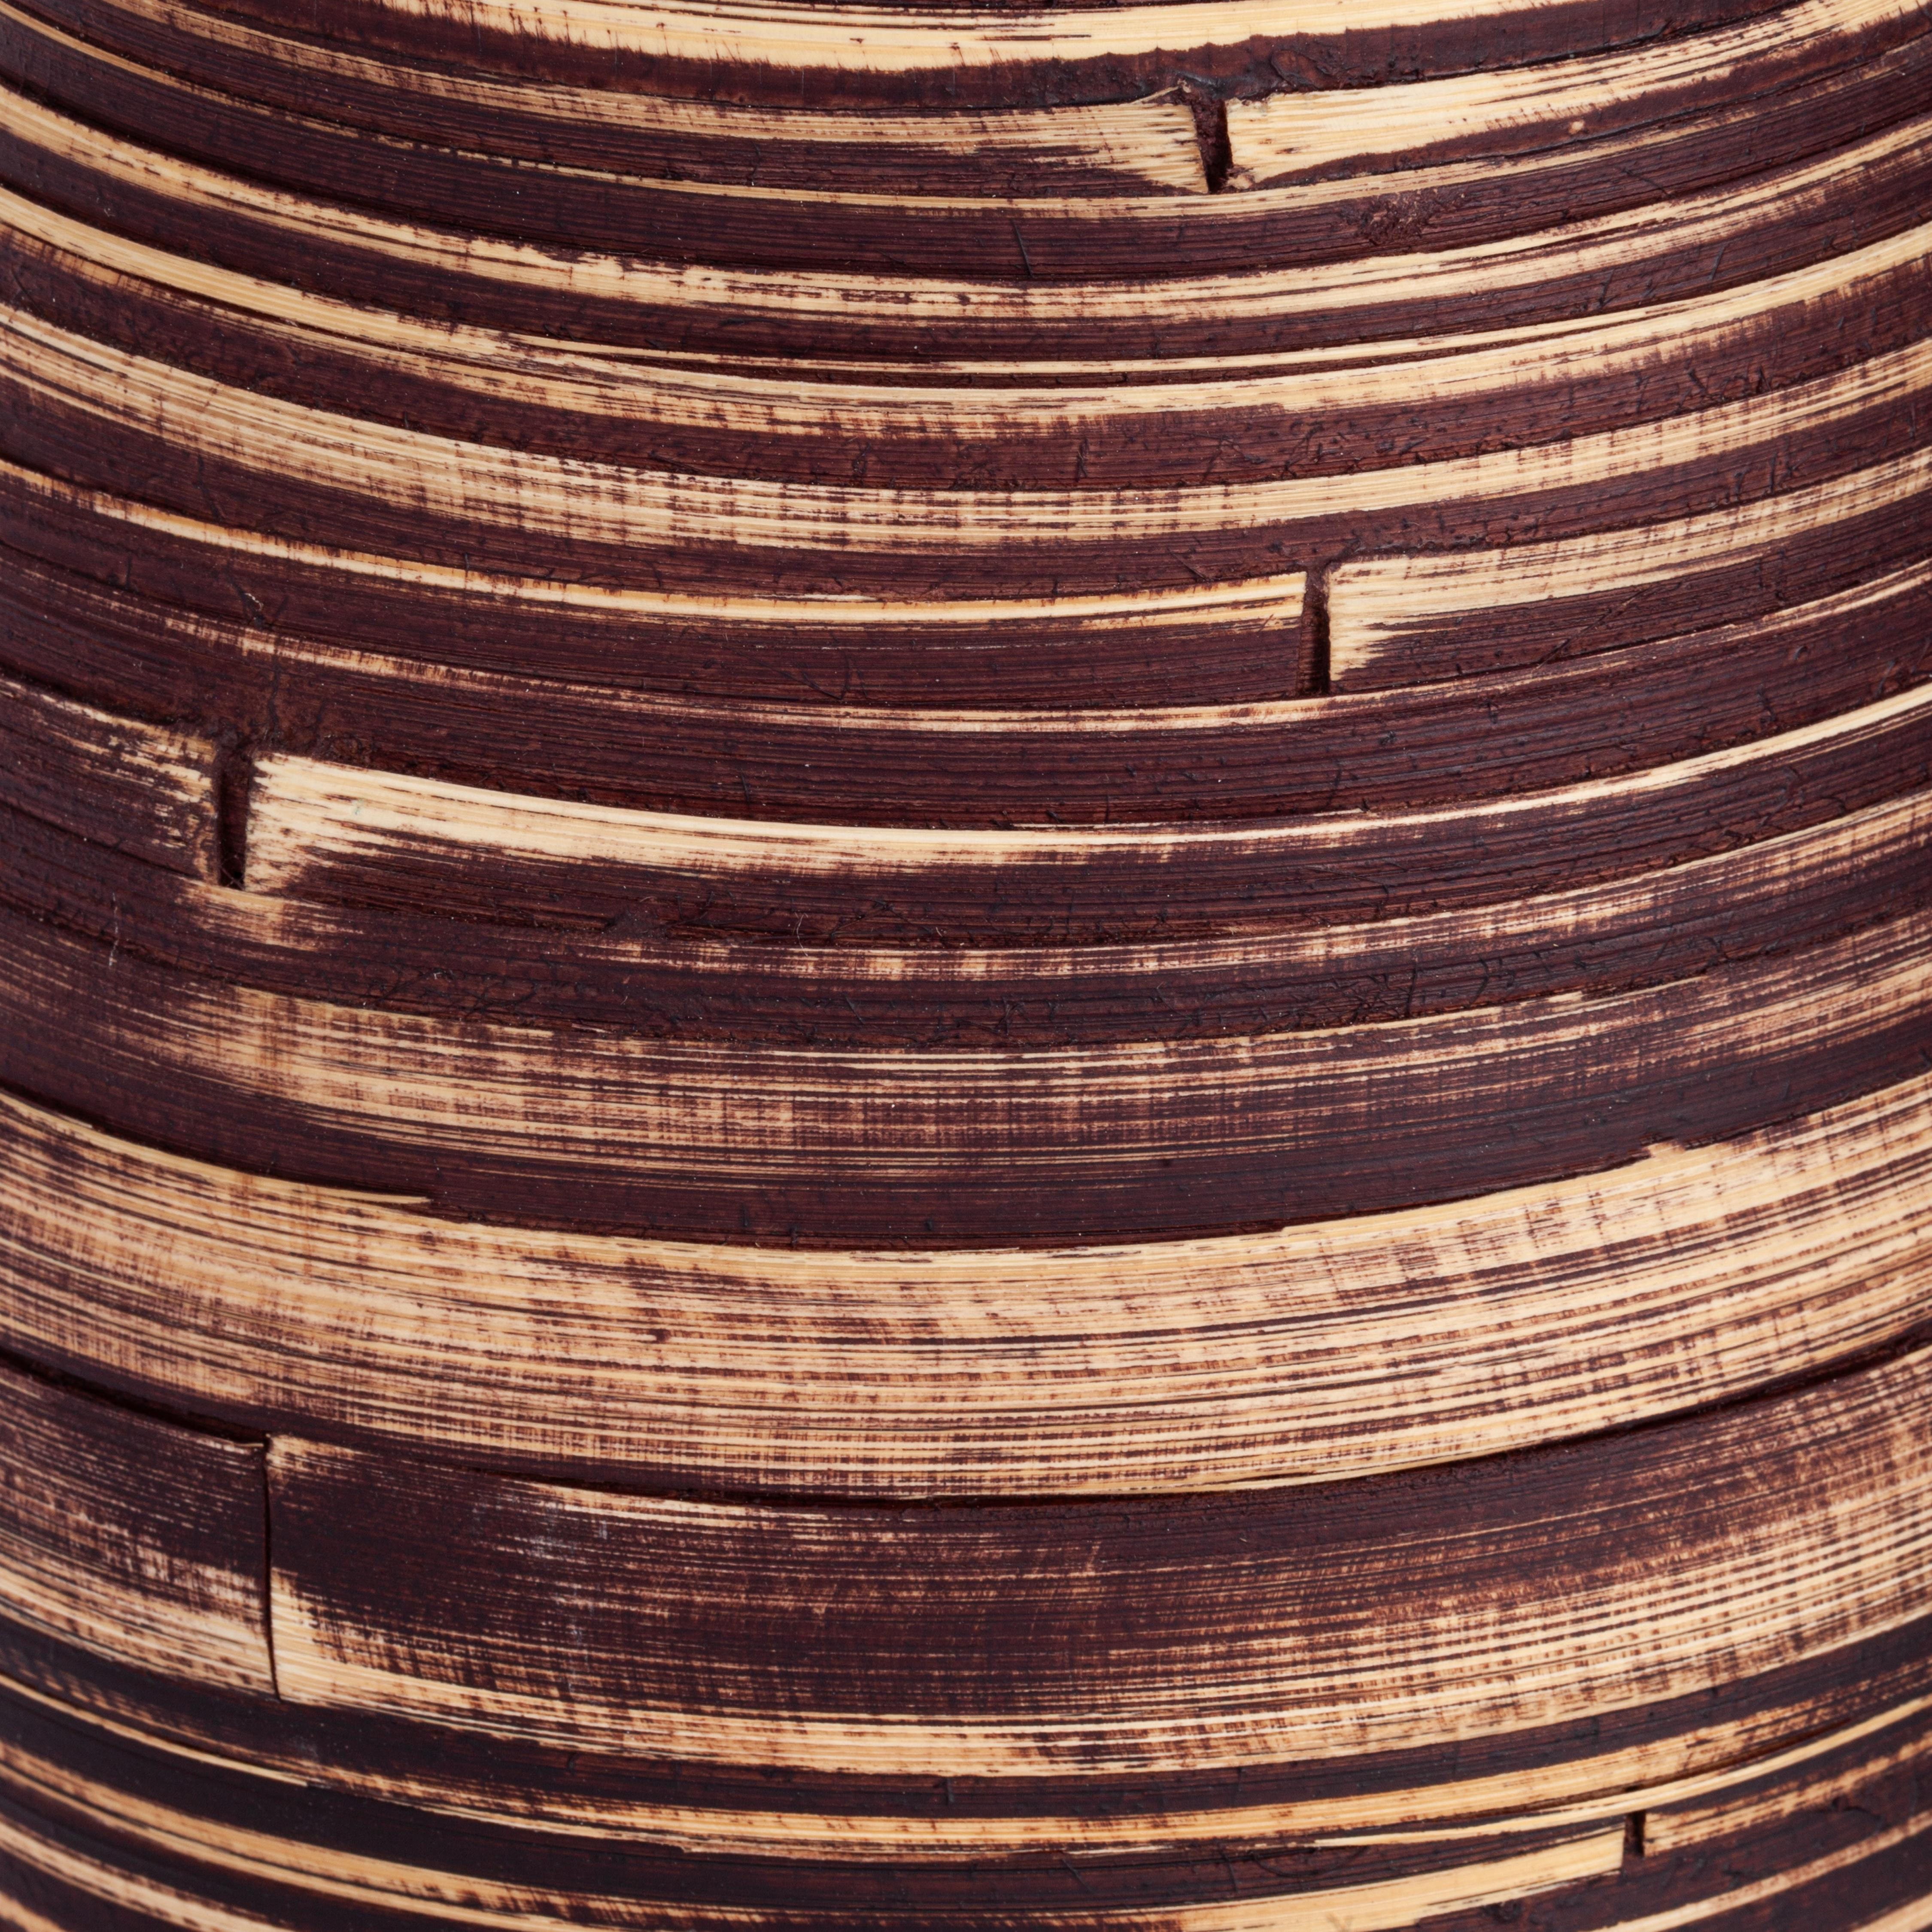 Набор ваз Secret De Maison VENCH ( mod. LS-0184 ) бамбук,  23 х 23 х 41 см , 20 х 20 х 36 см, 18 х 18 х 31 с, коричневый/бежевый